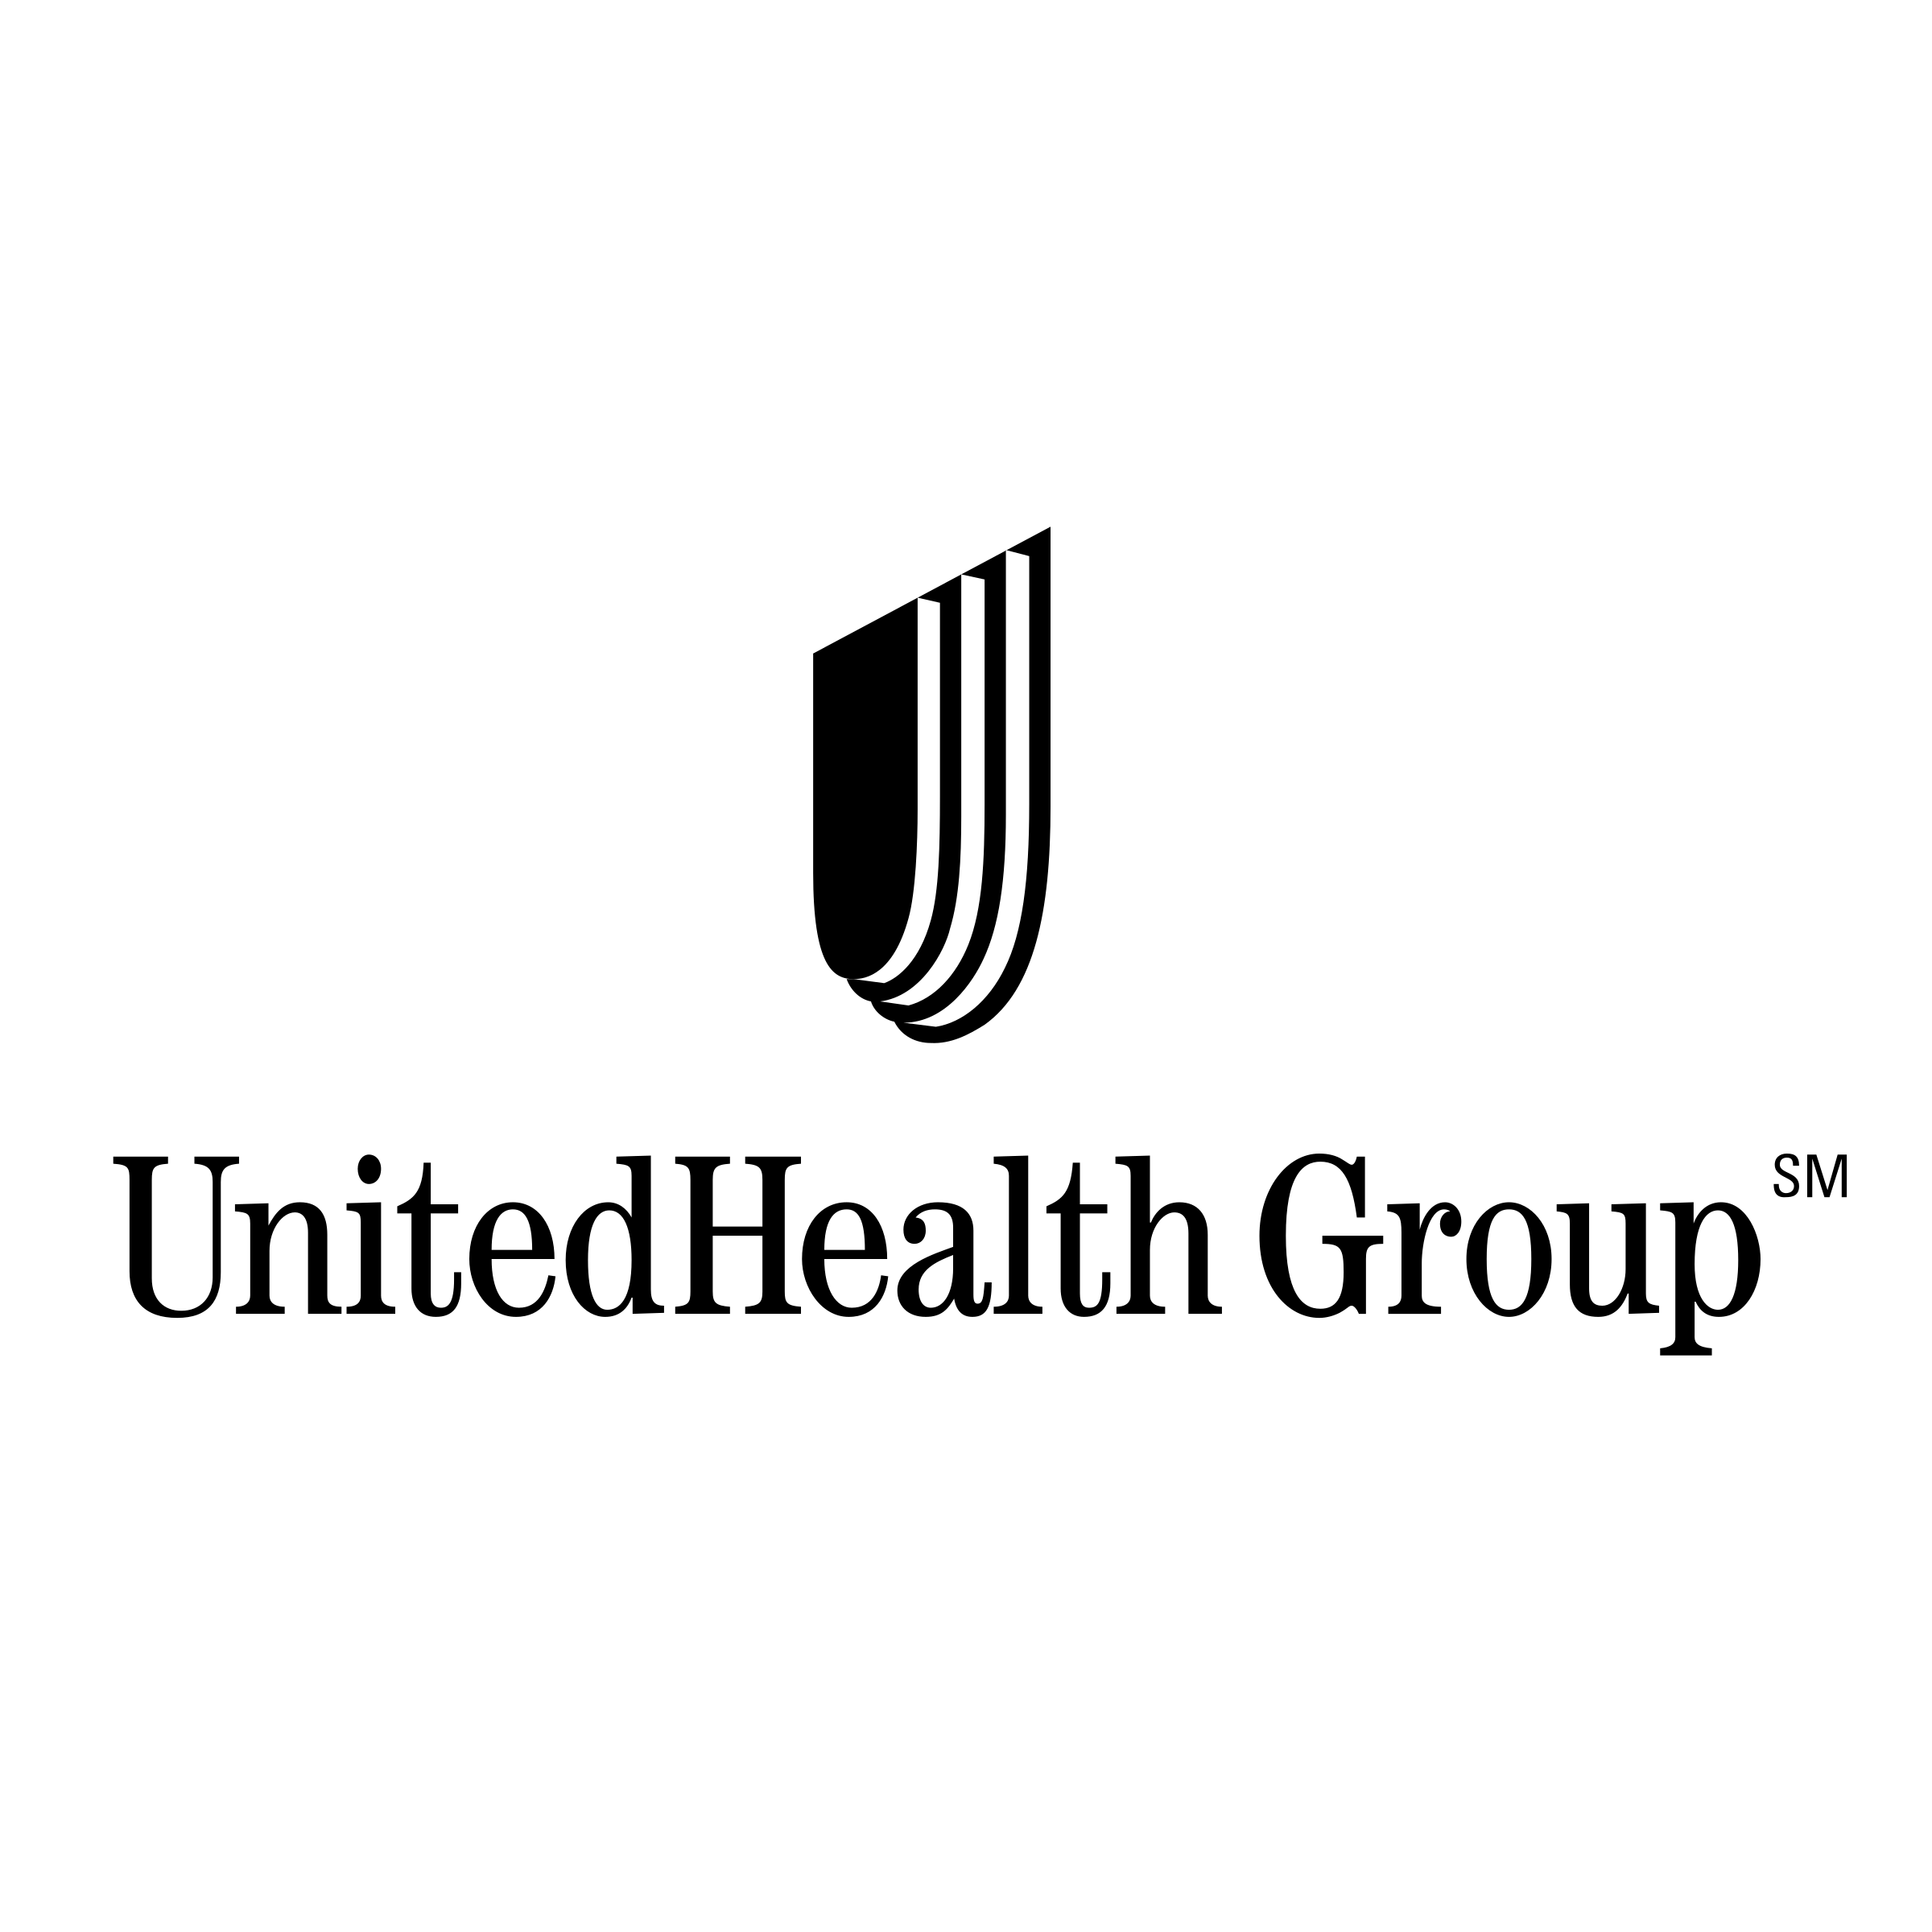 UnitedHealth Logo - UnitedHealth Group Logo PNG Transparent & SVG Vector - Freebie Supply